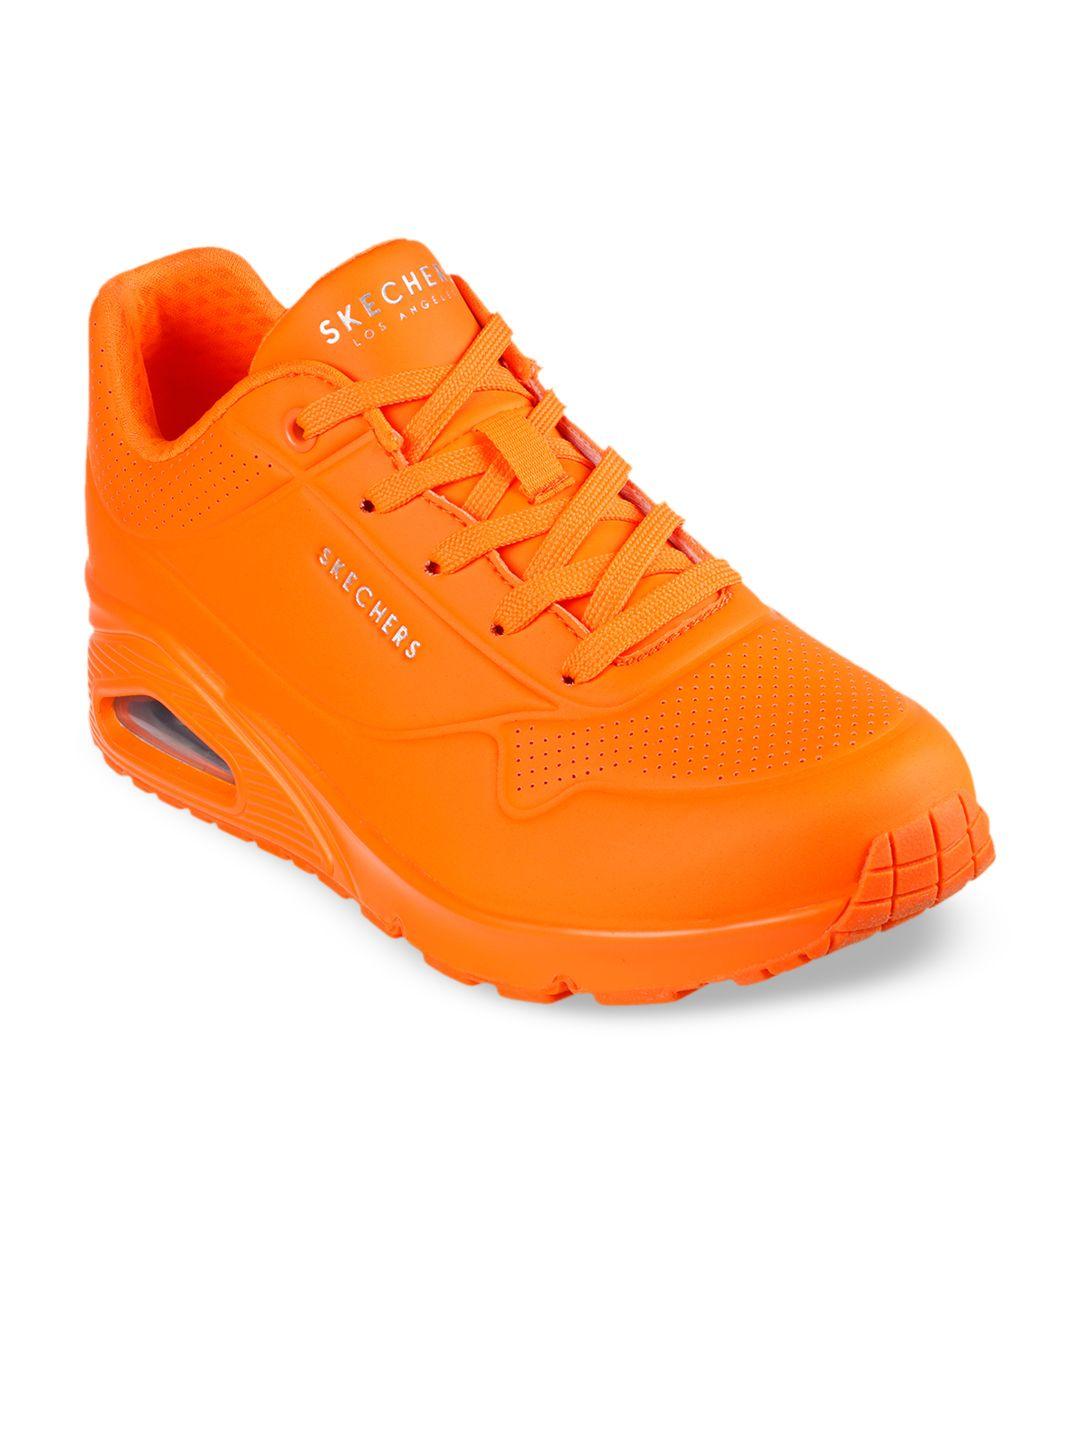 skechers women orange solid sneakers